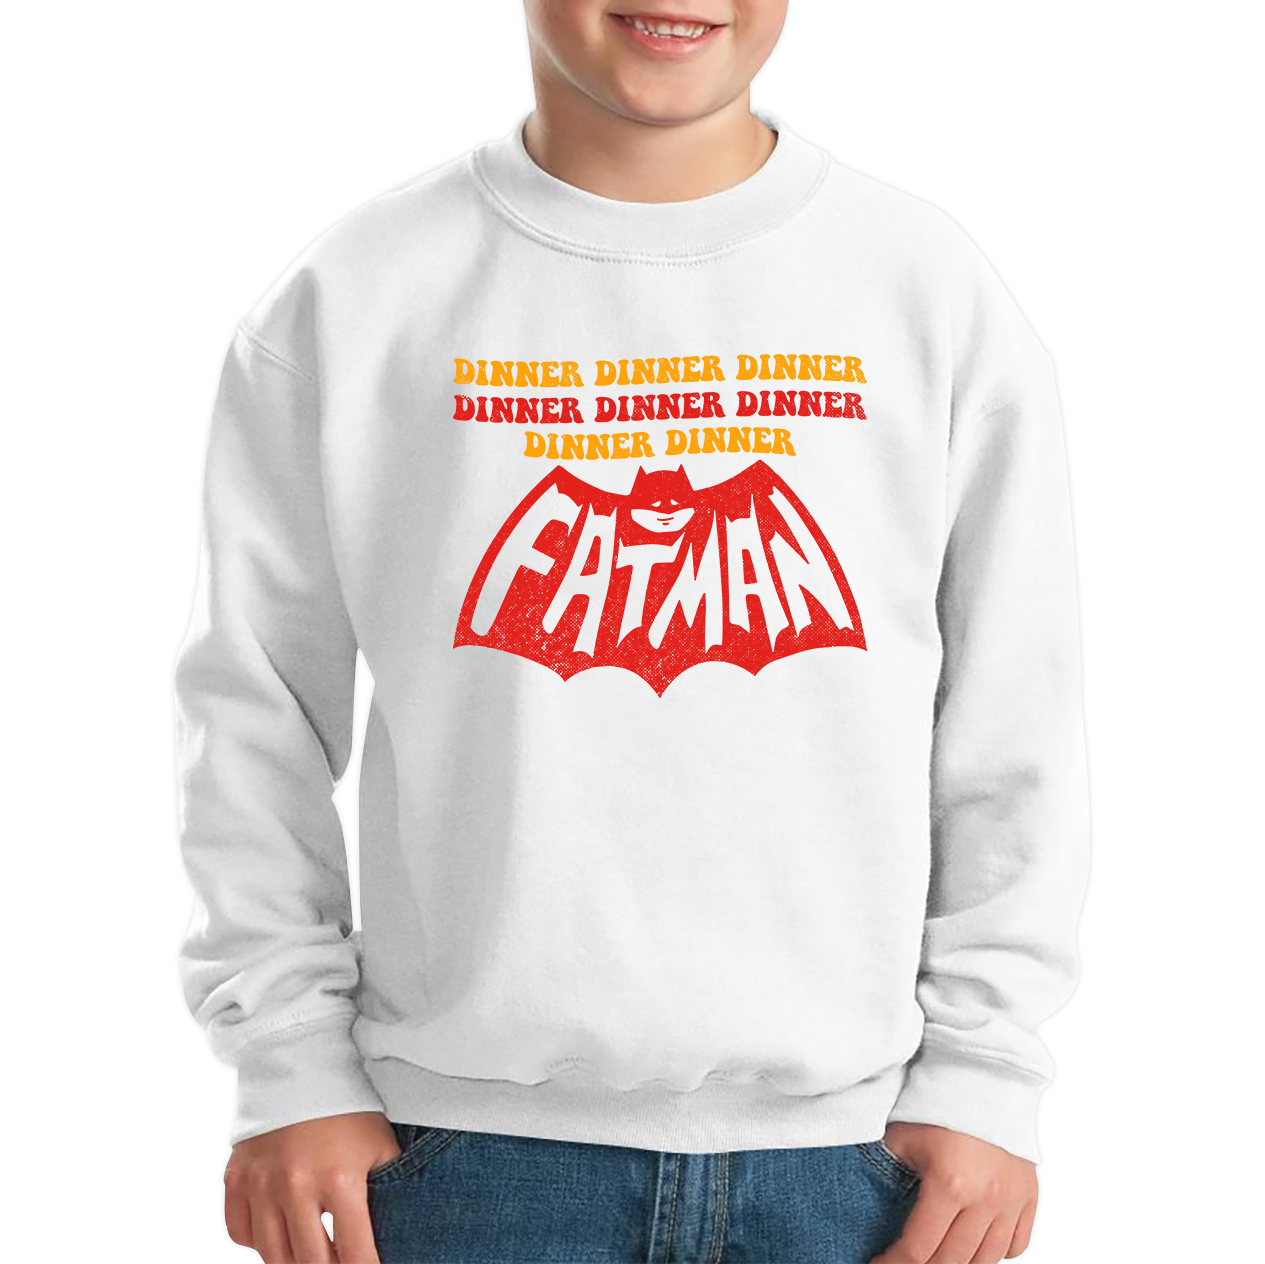 Dinner Dinner Fatman Jumper Superhero Batman Inspired Funny Novelty Comic Parody Kids Sweatshirt